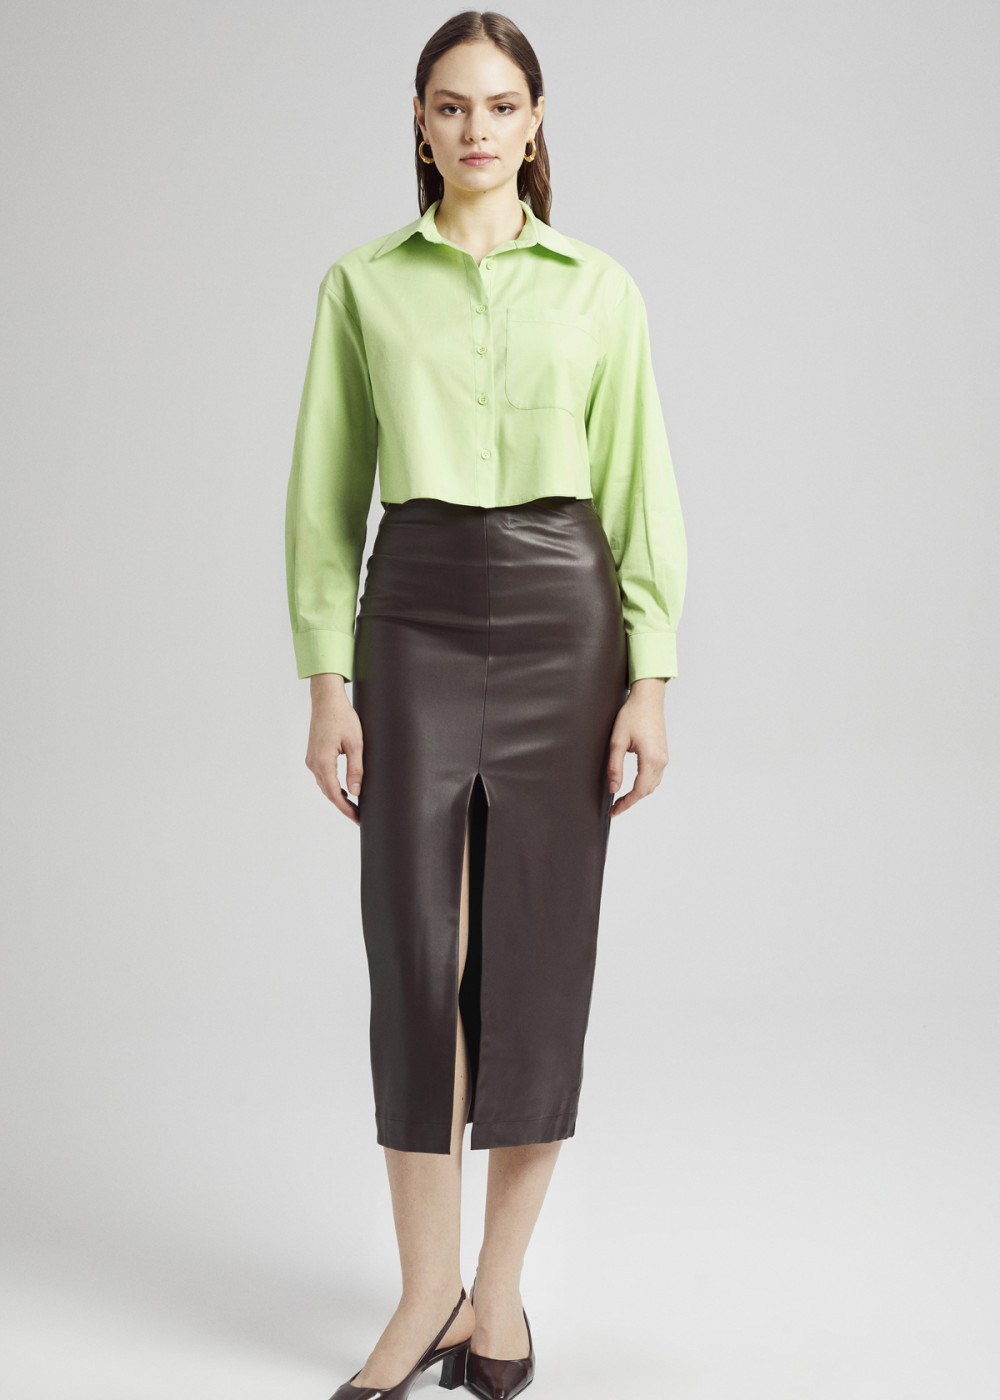 Midi Length Leather Skirt with Slit